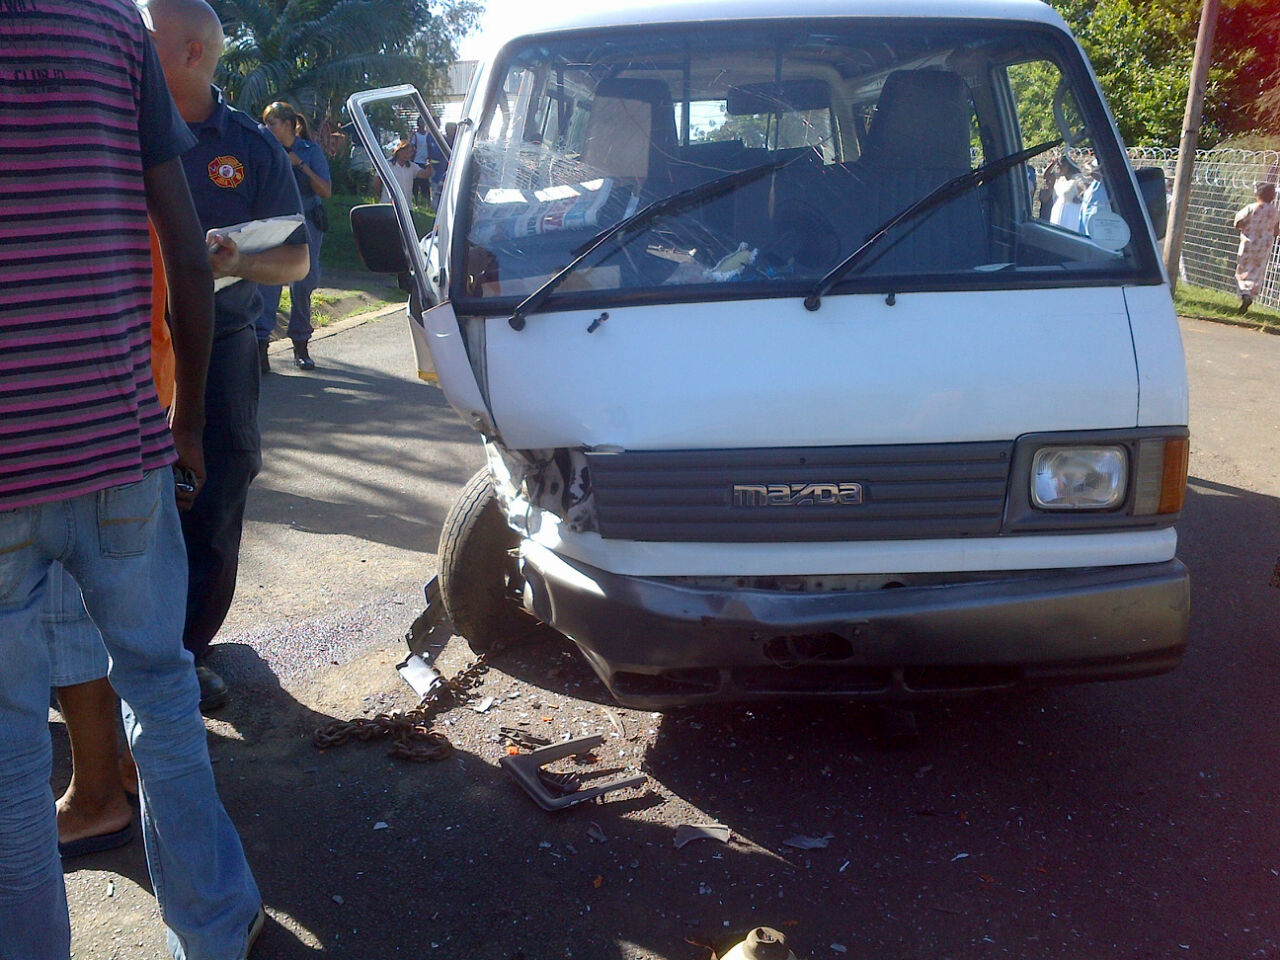 School children injured in crash in the Pietermaritzburg area